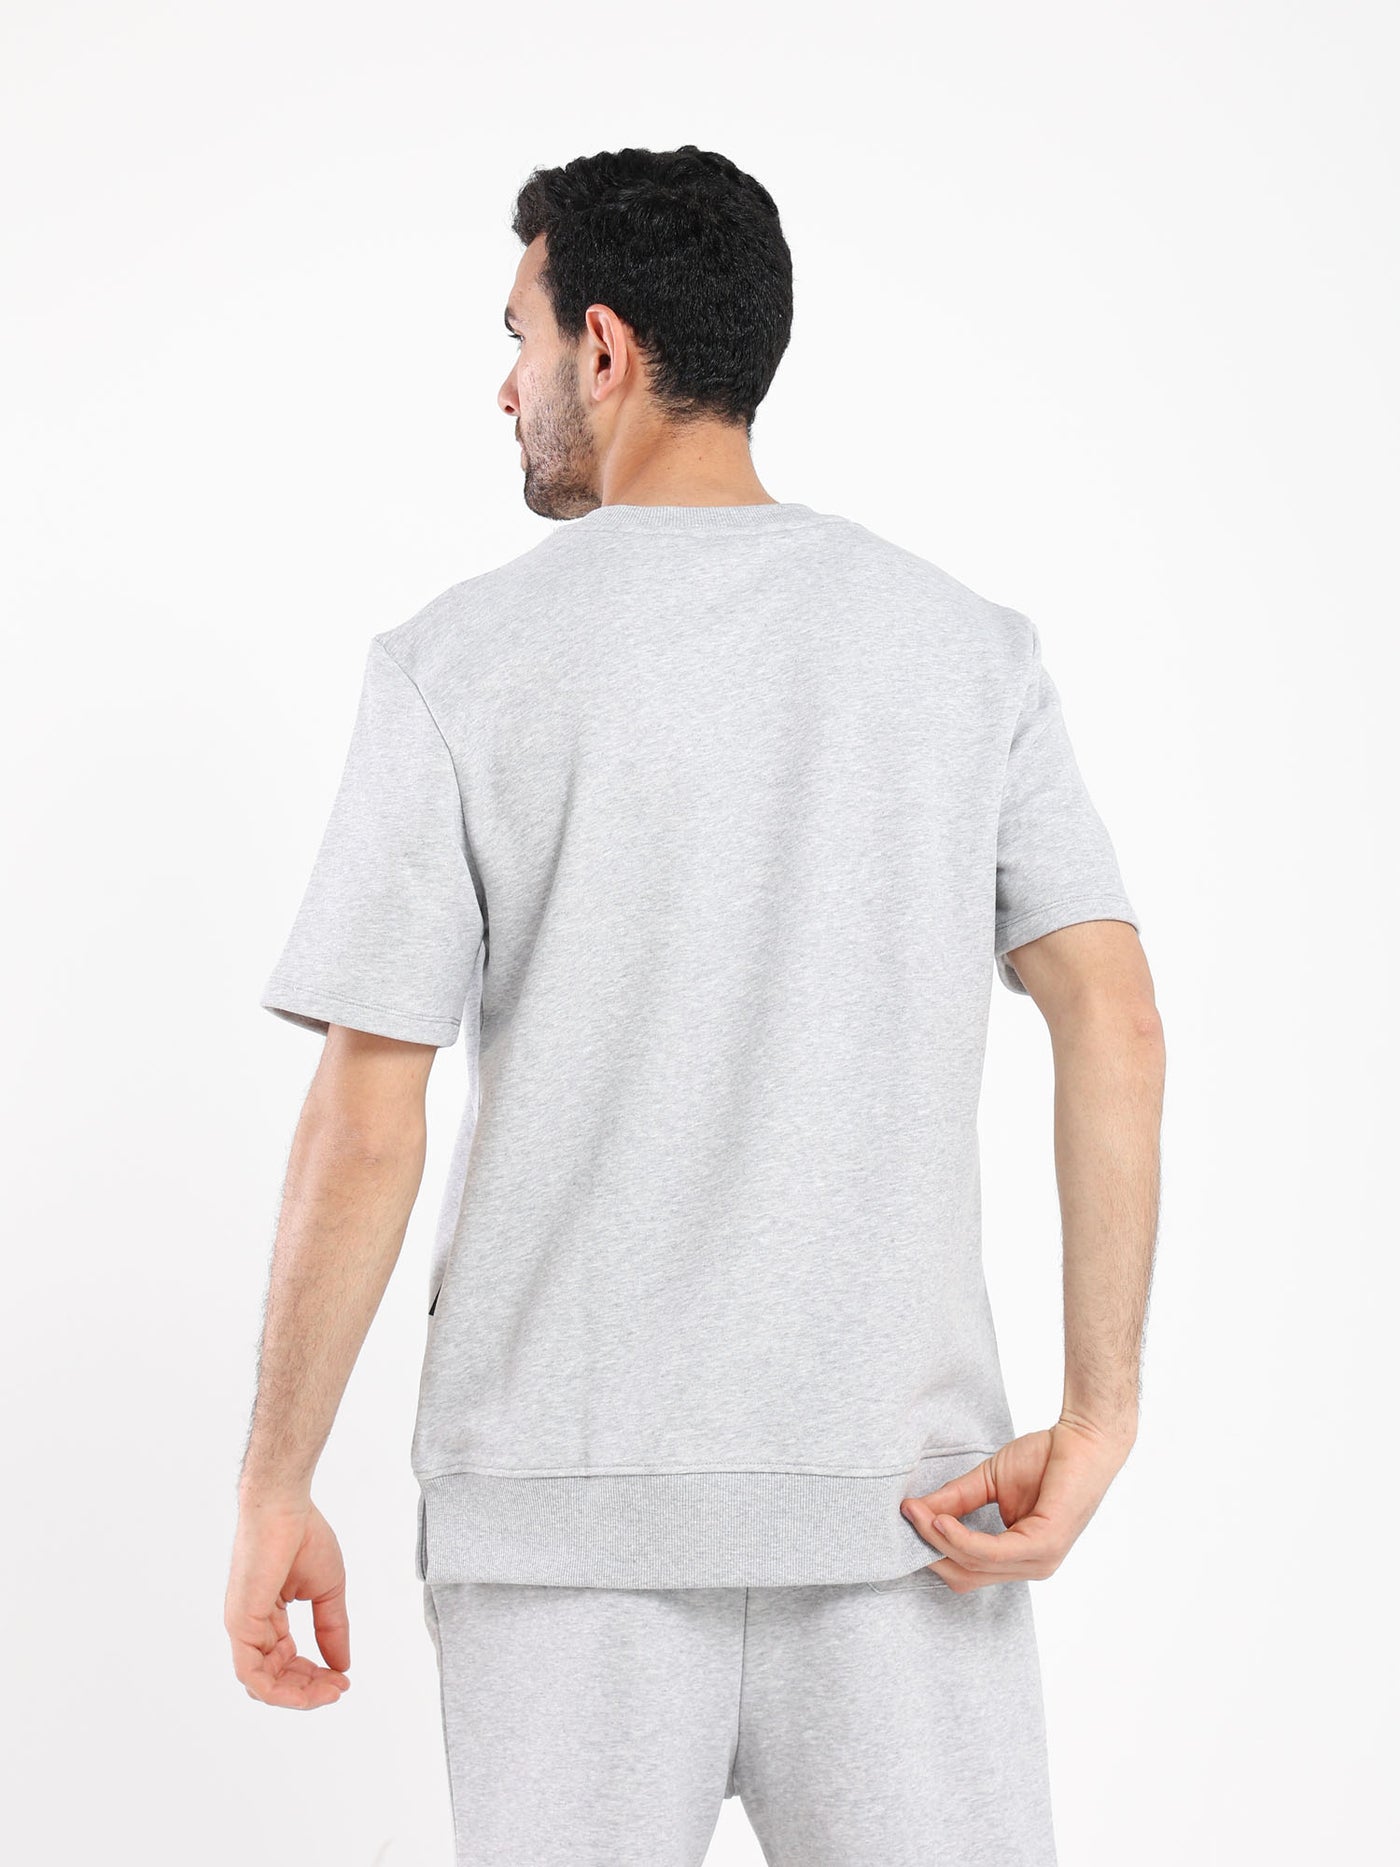 Sweatshirt - Short Sleeves - Text Print